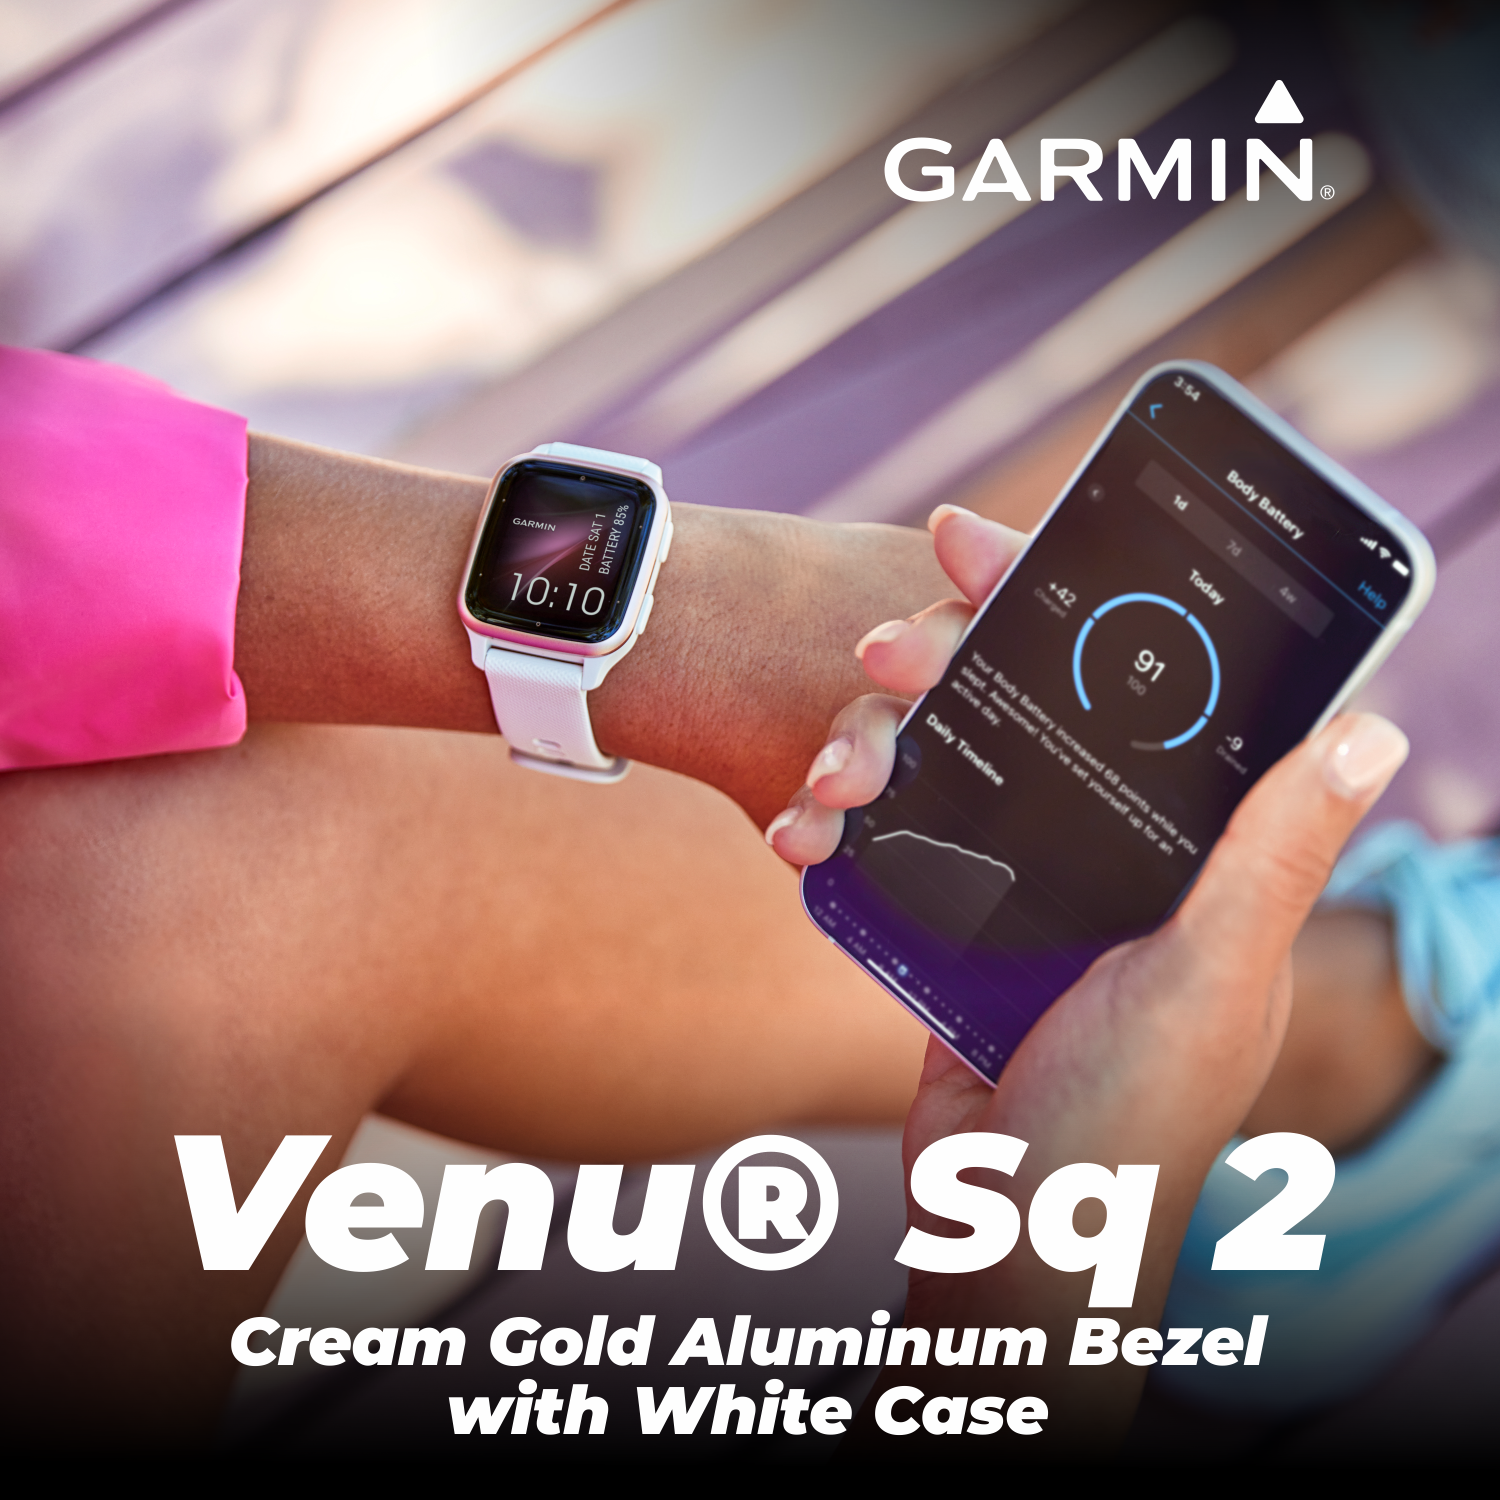 Garmin Venu Sq 2 Music Cream Gold Aluminum Bezel with French Gray Band